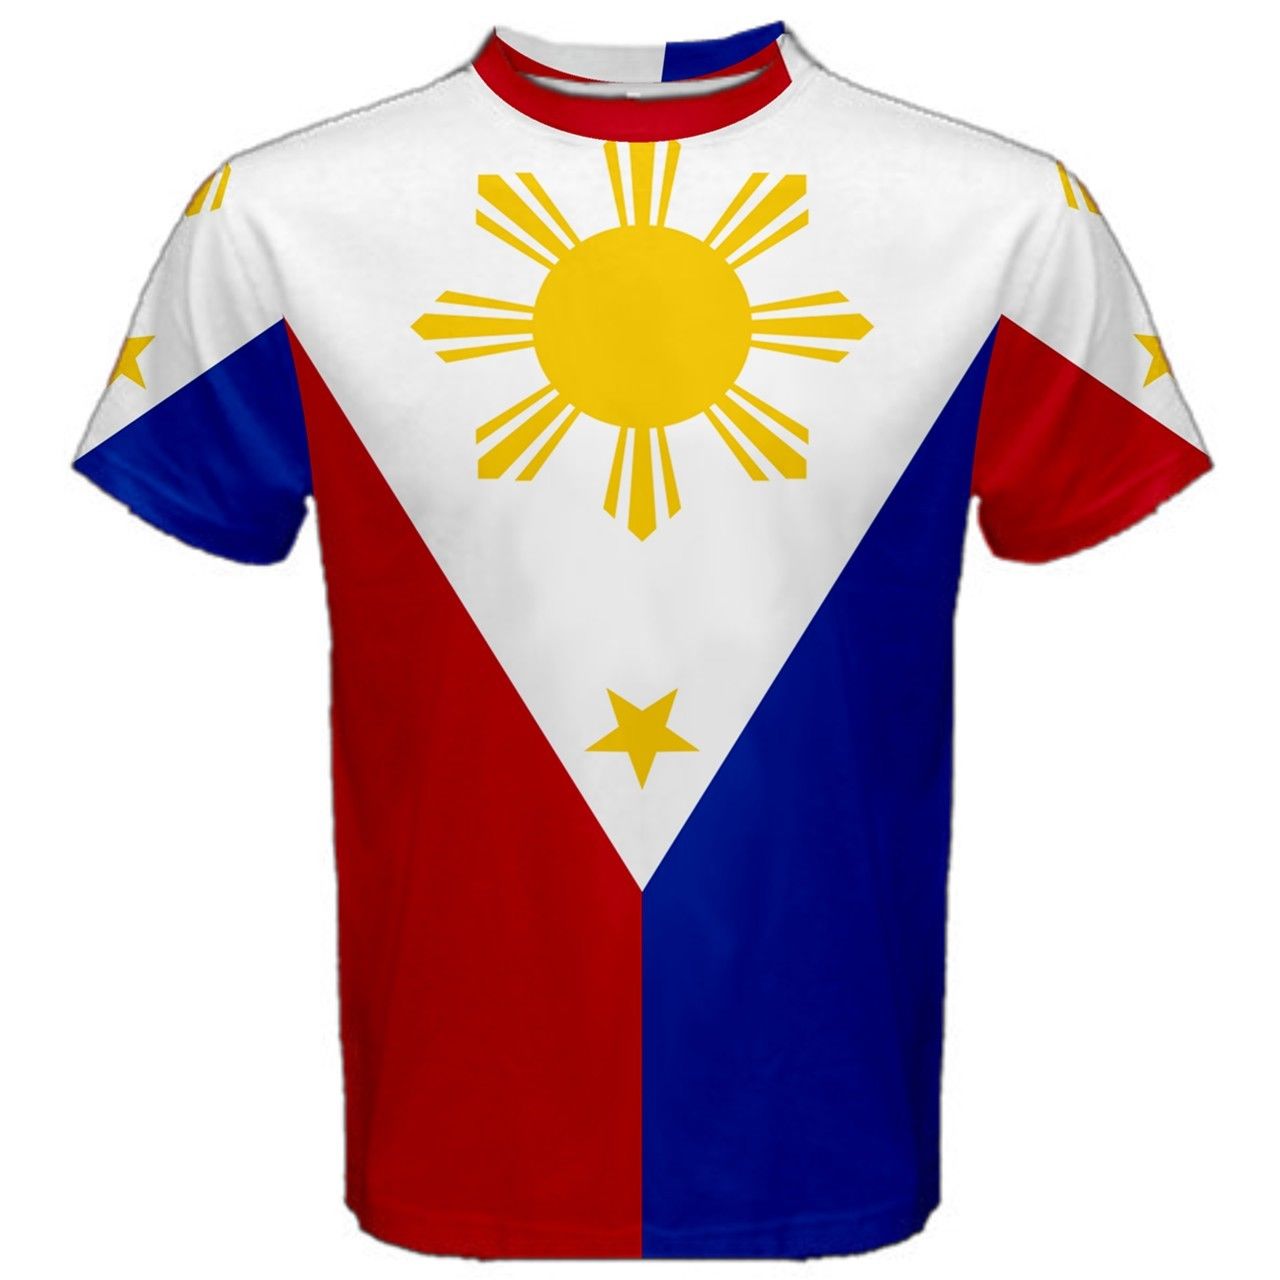 jersey philippines